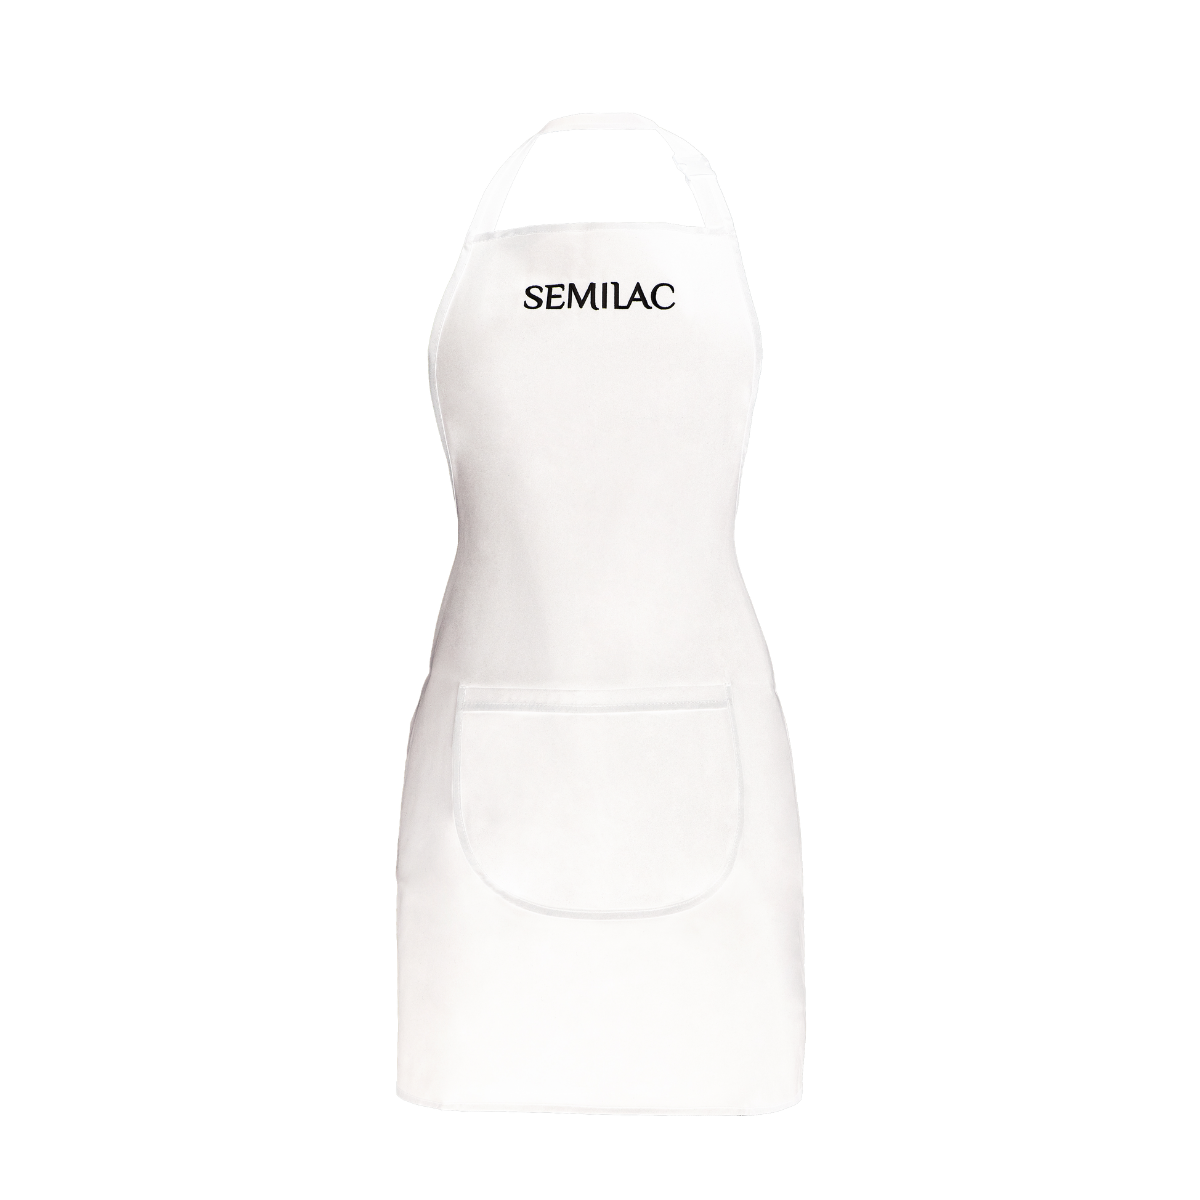 Semilac Apron White - Semilac UK